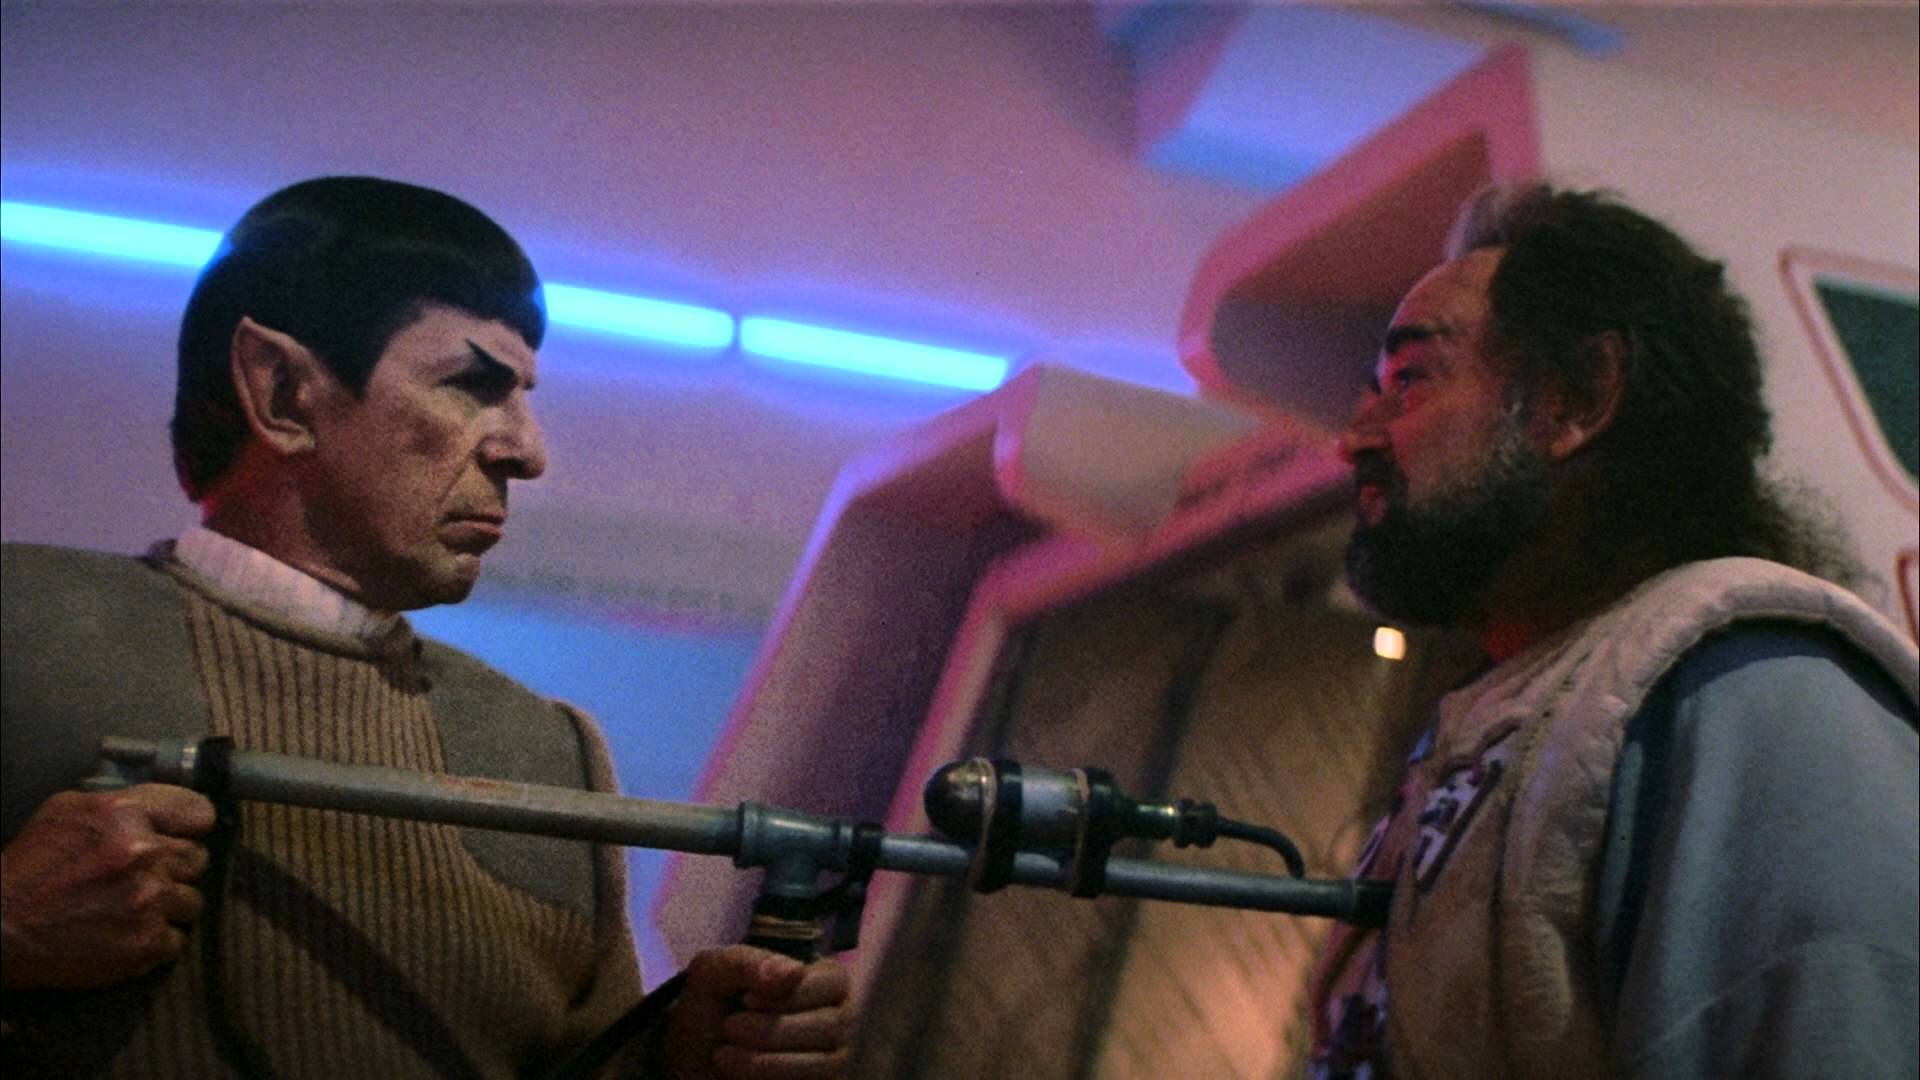 Star Trek V: The Final Frontier HD wallpapers, Desktop wallpaper - most viewed